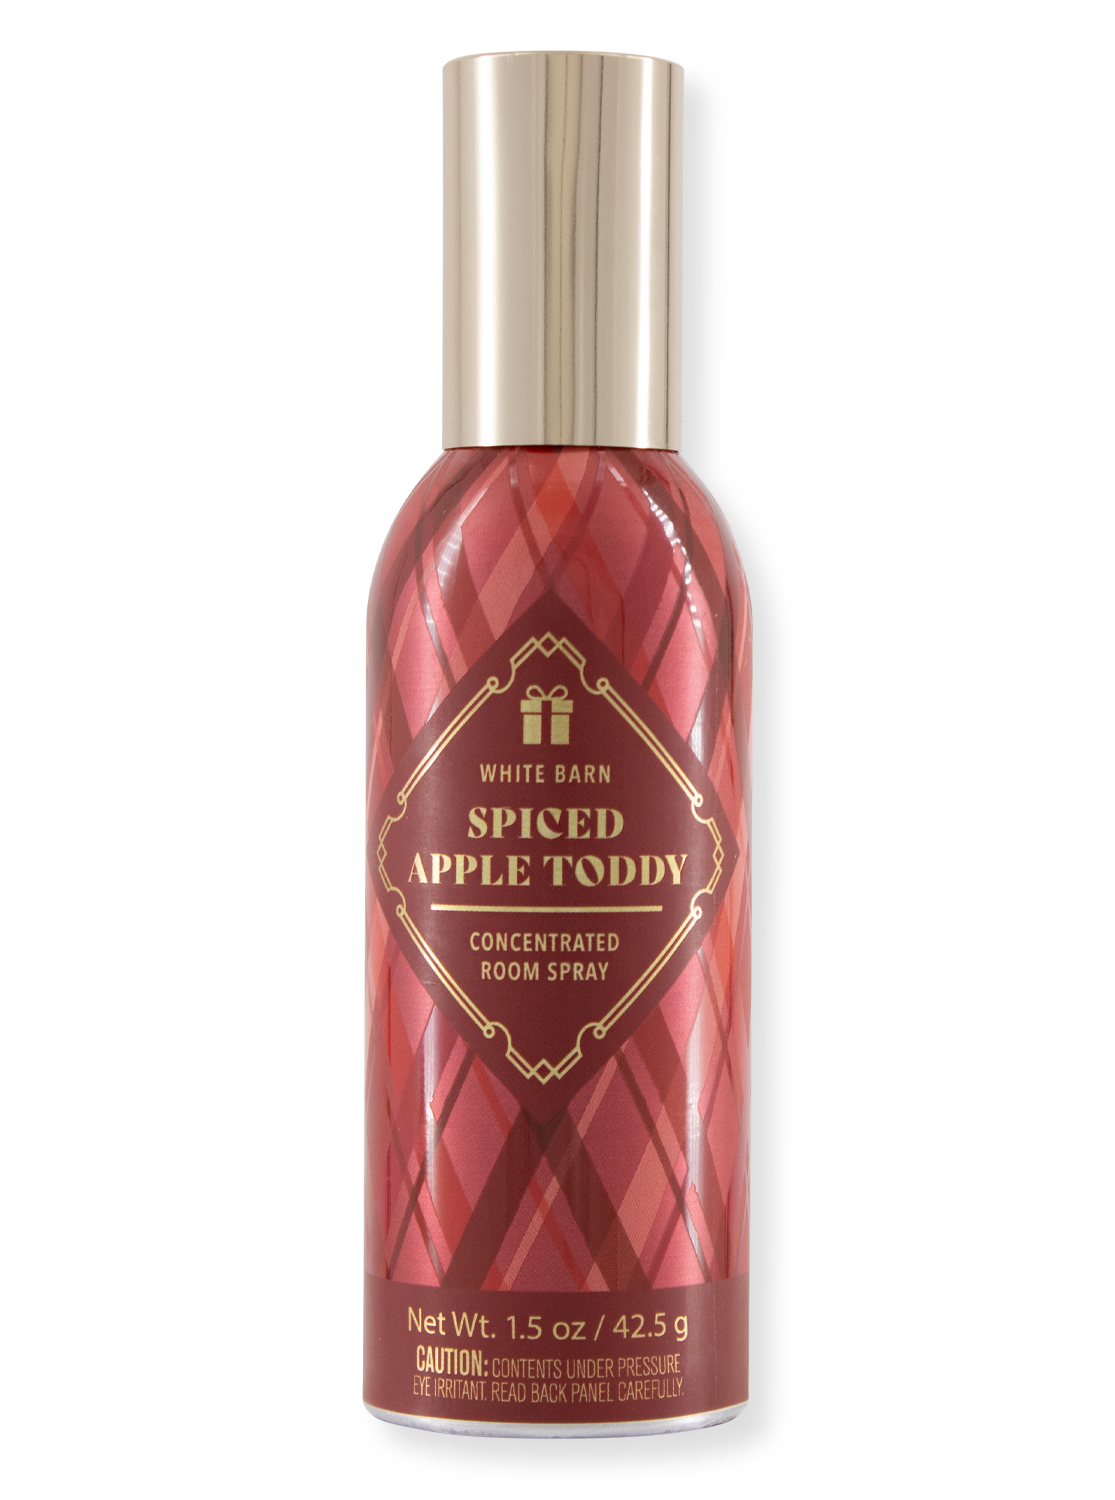 Raumspray - Spiced Apple Toddy - 42.5g